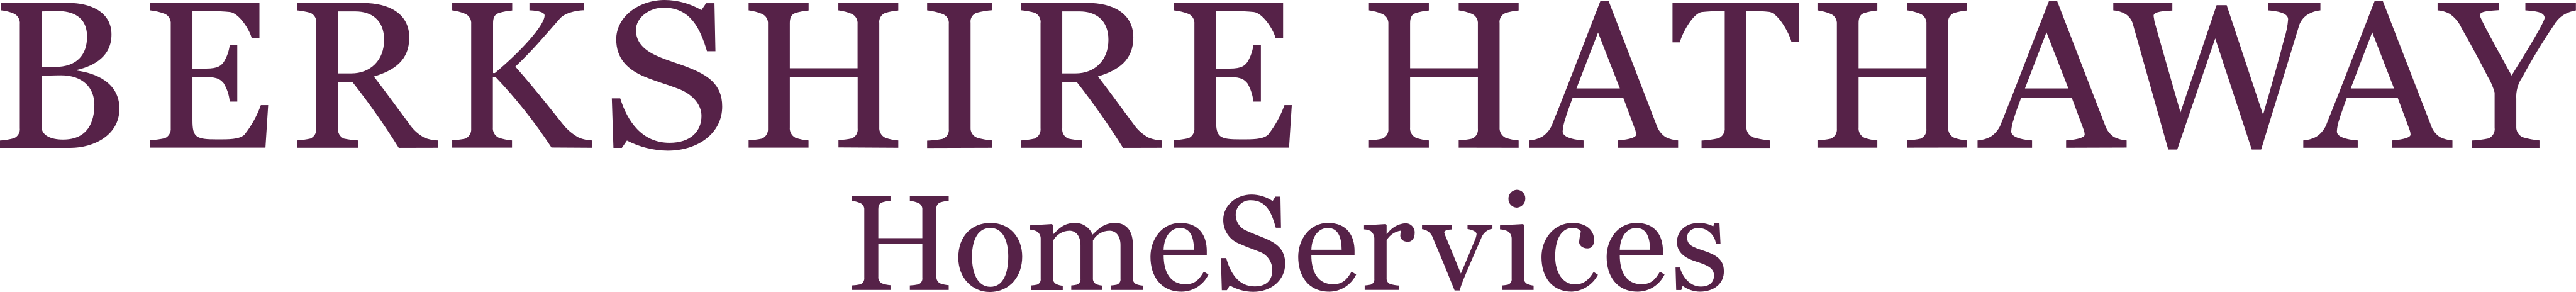 Berkshire Hathaway HomeServices Logo.